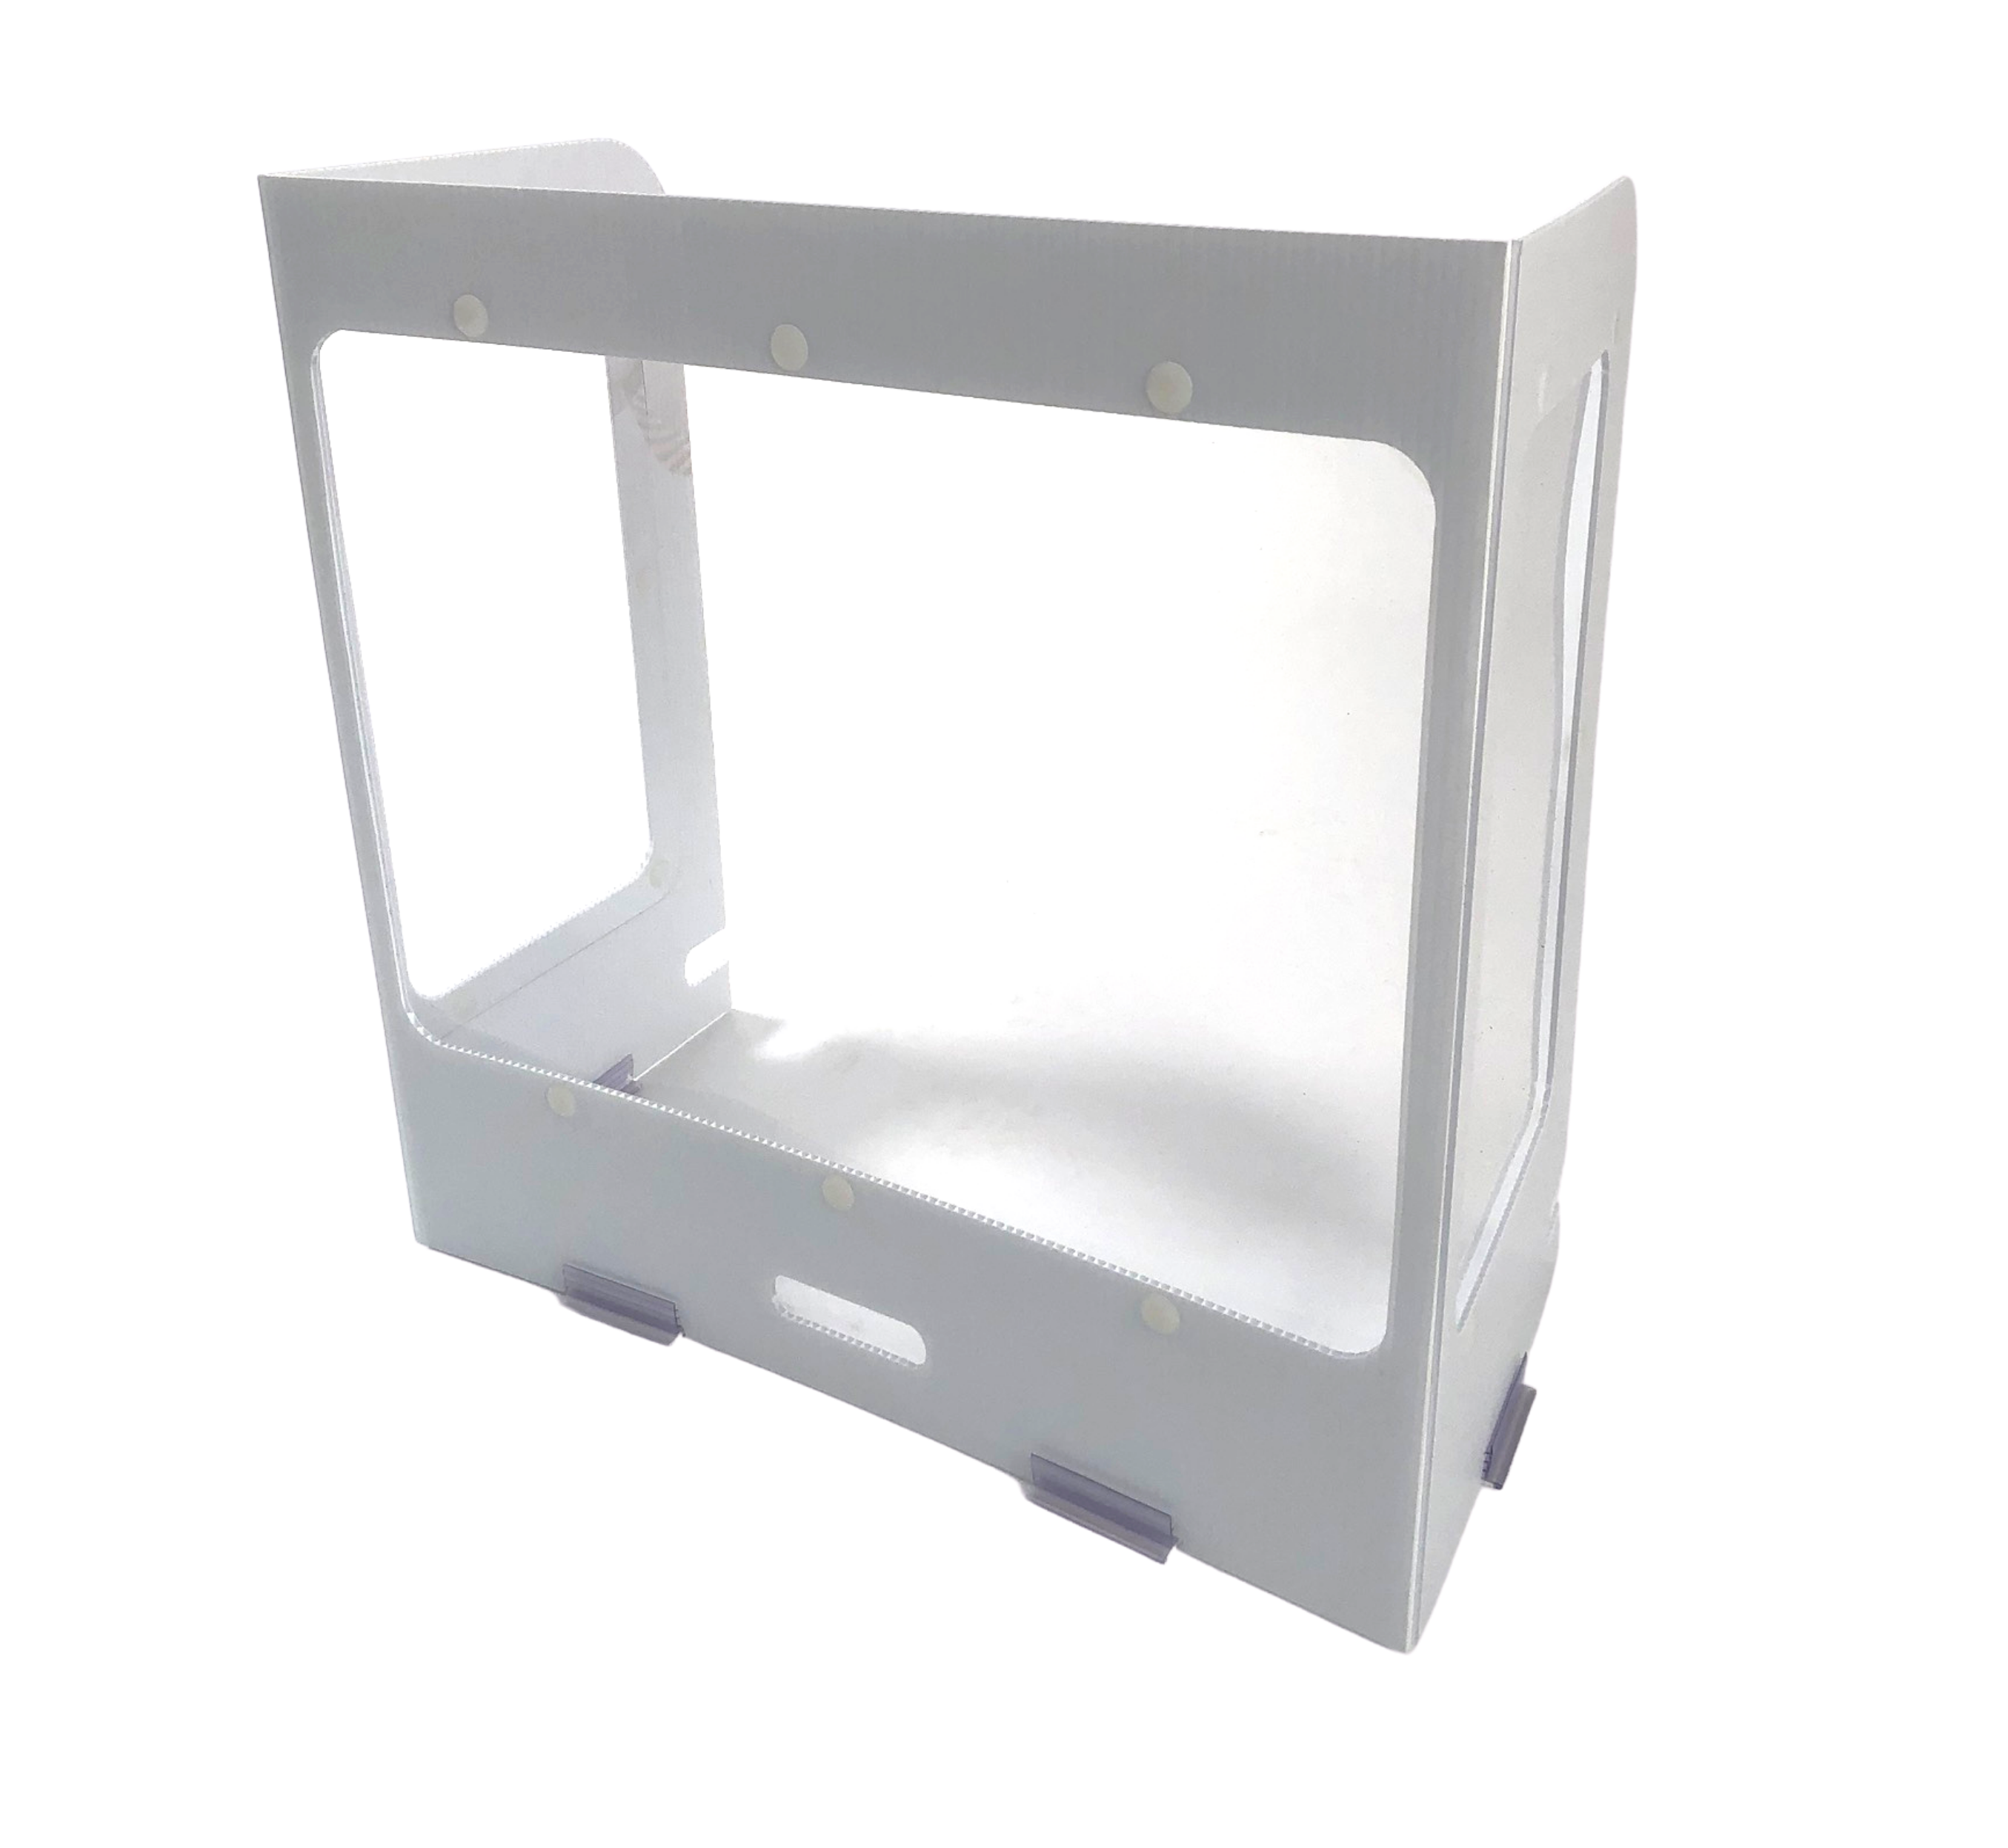 24"w x 24"h x 12'd 3-Sided Portable Coroplast Desk Shield (Clone)